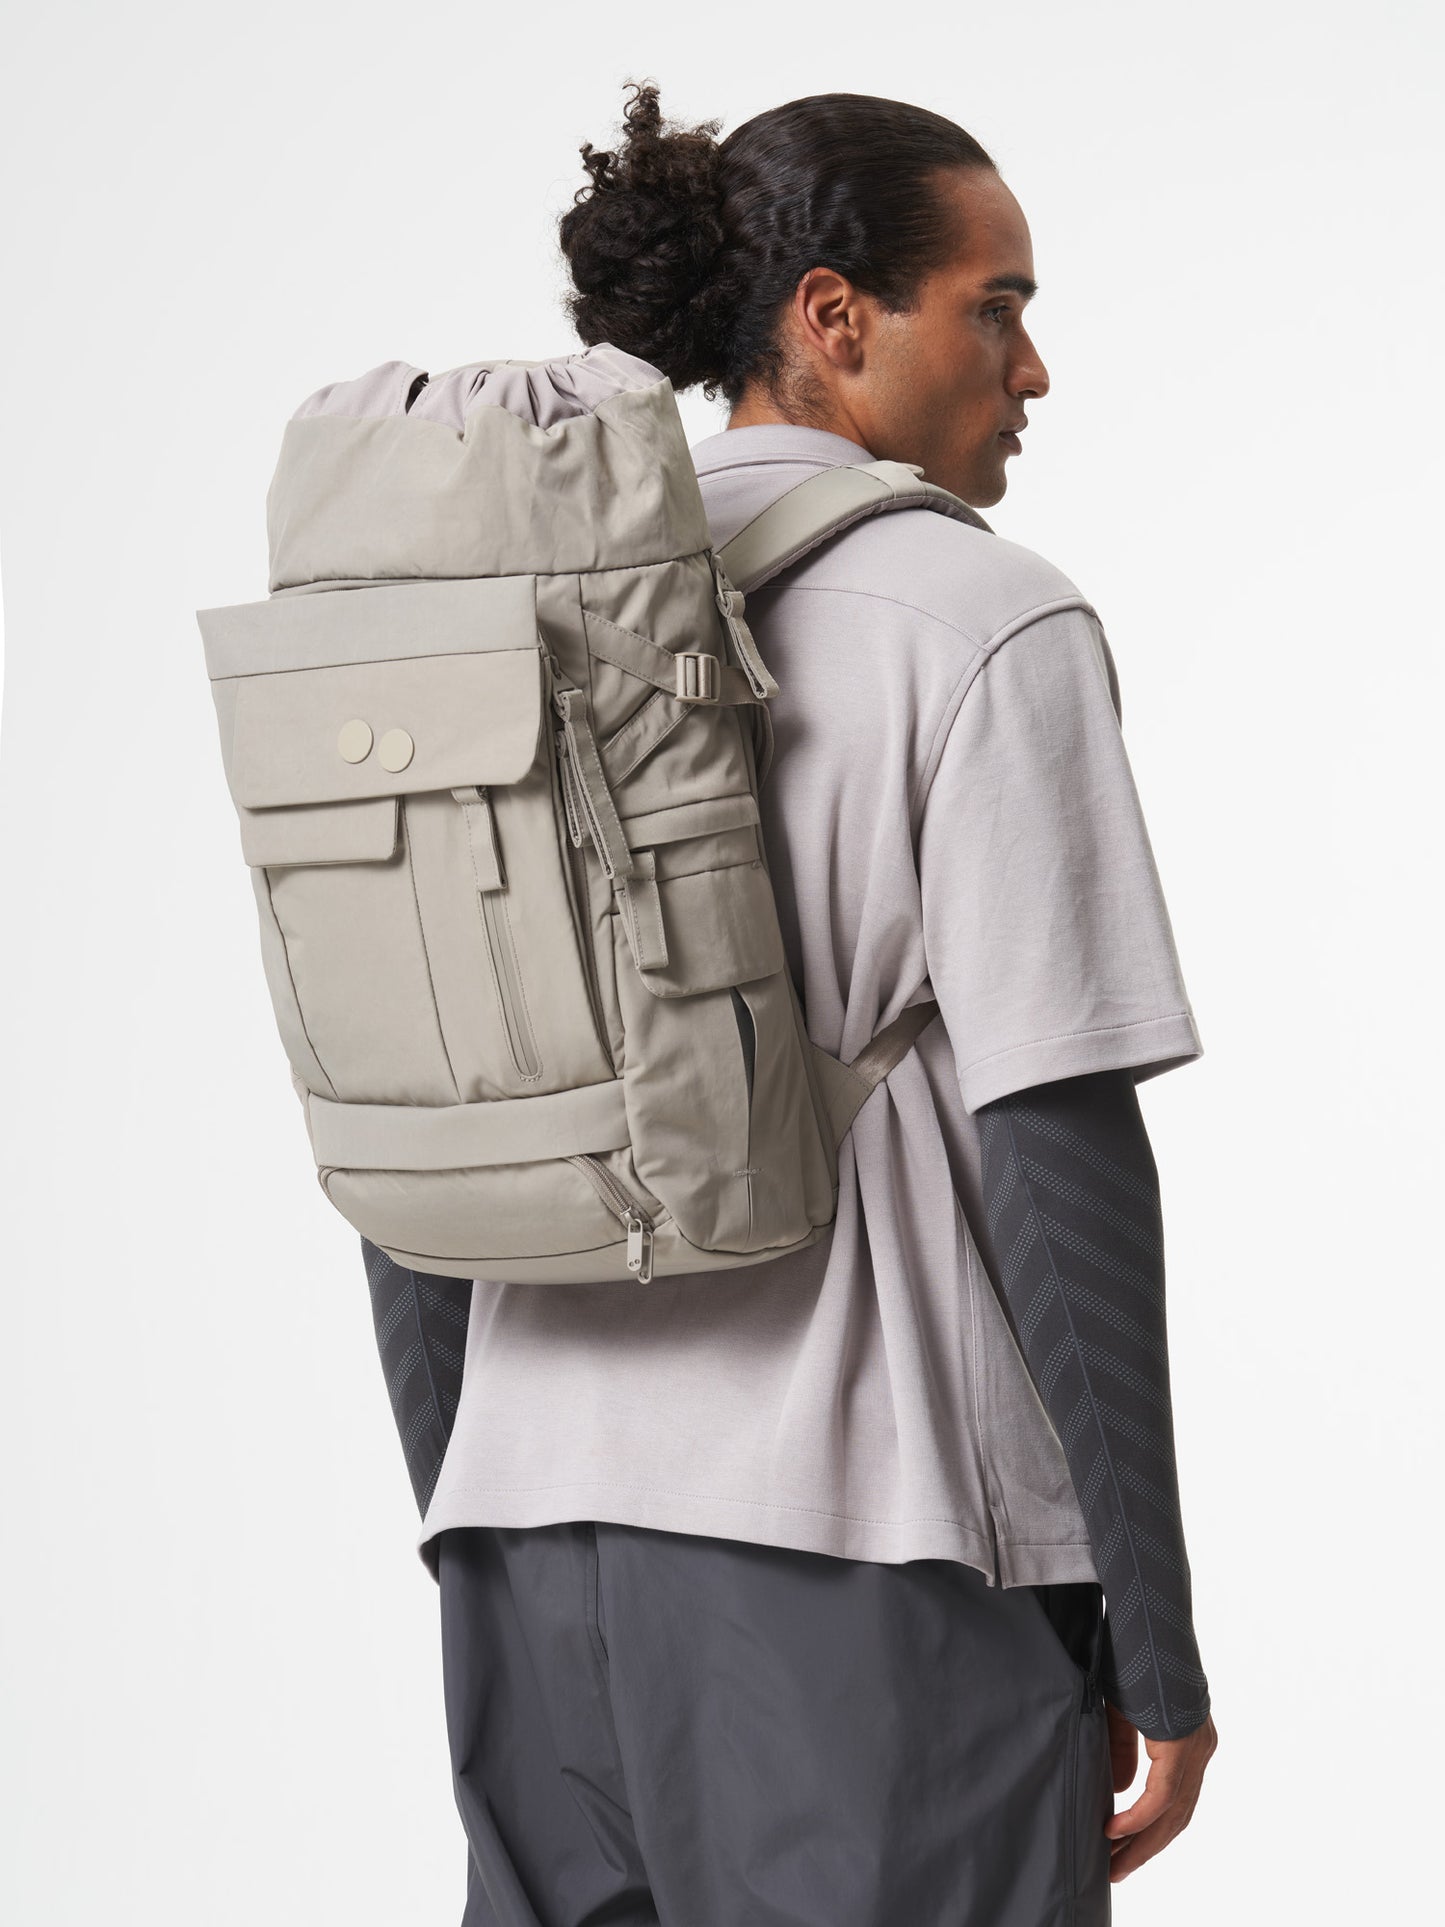 pinqponq-backpack-Blok-Medium-Crinkle-Taupe-model-side